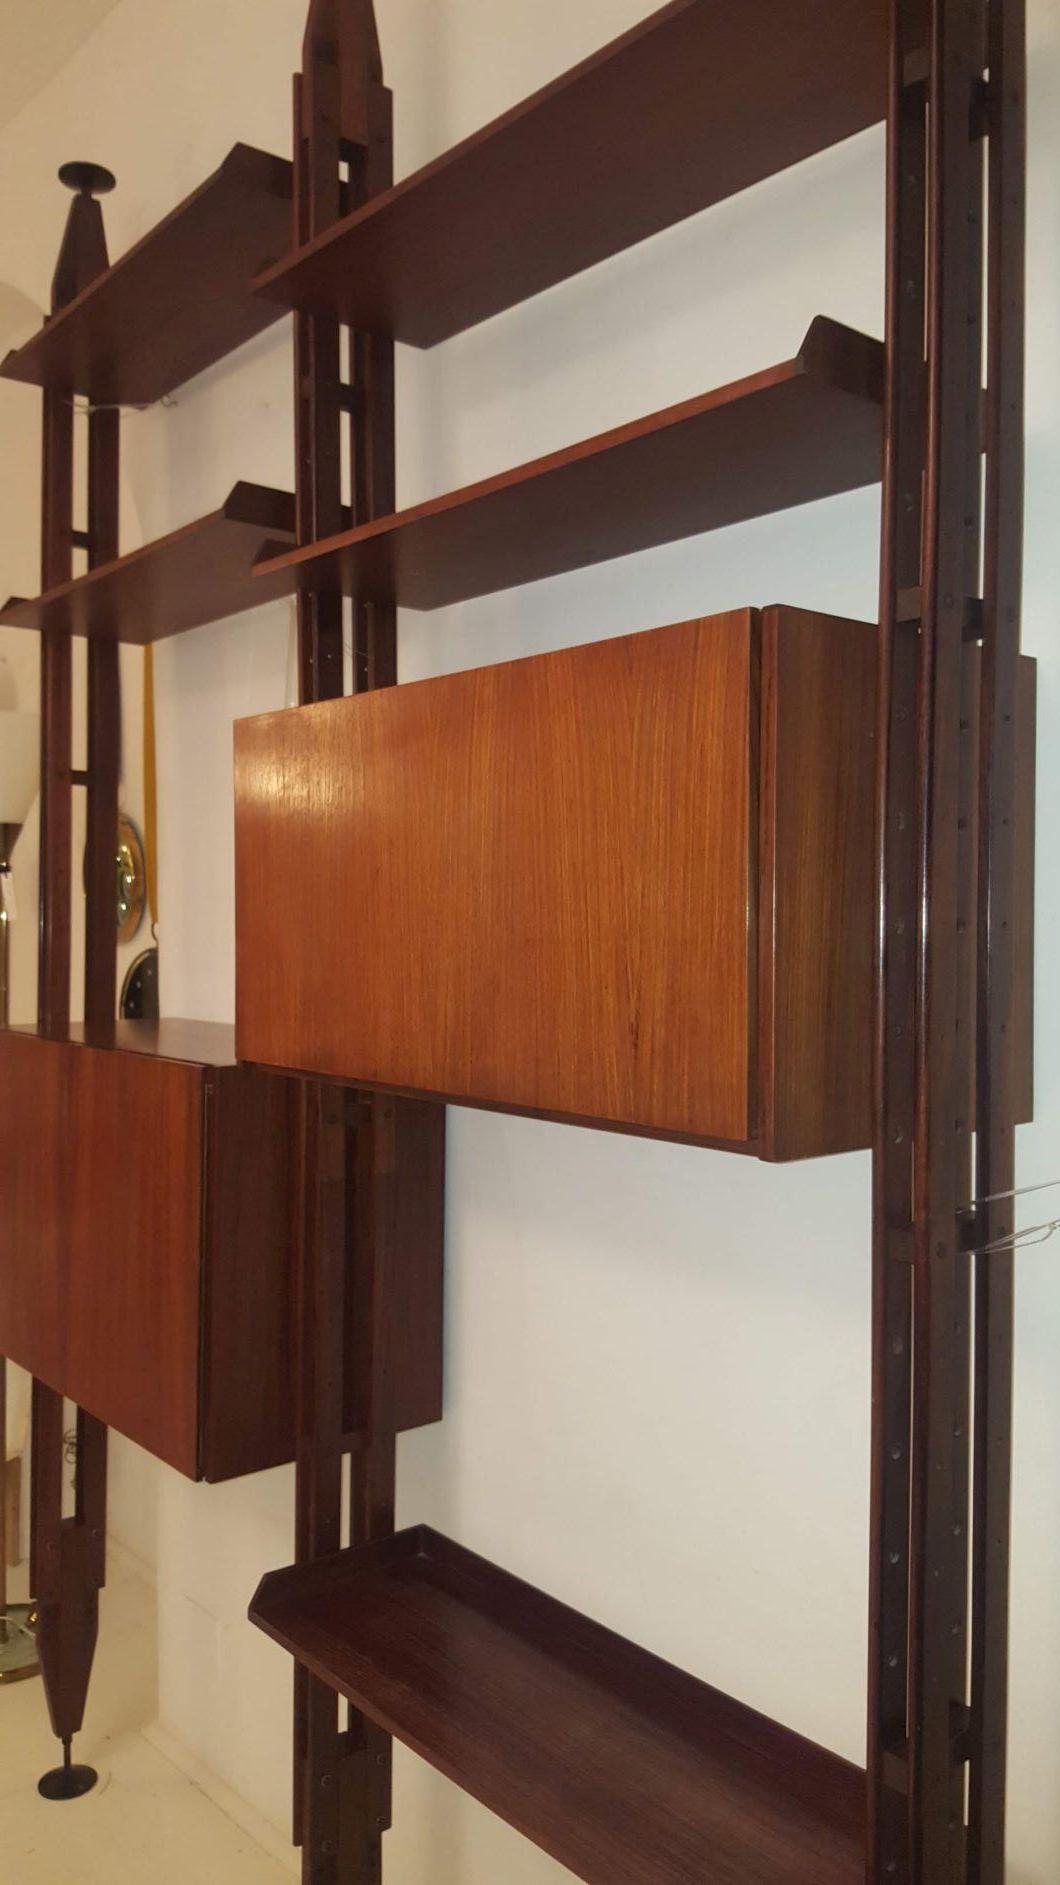 Italian Franco Albini Midcentury Bookcase Wood LB7 Designed for Poggi in 1957, Italia